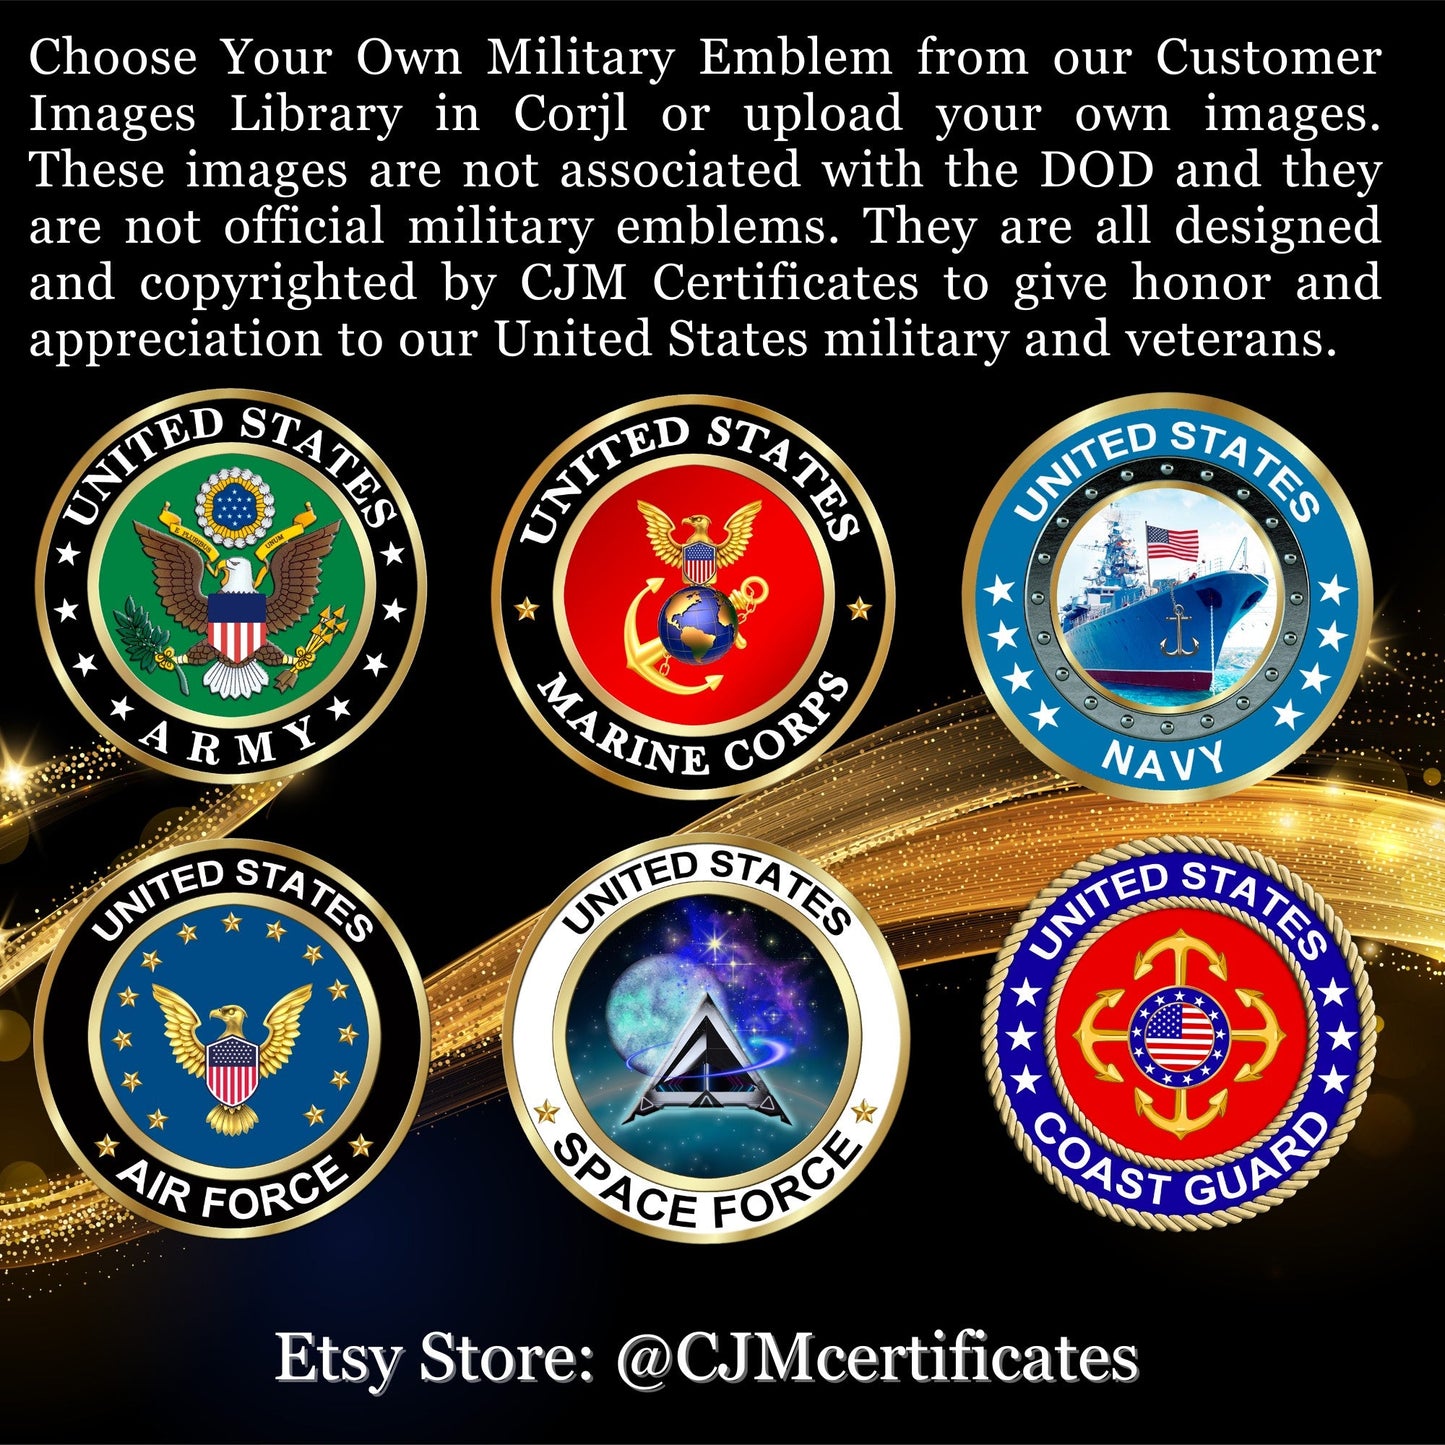 All Services Veteran Appreciation Certificates-20 Pack